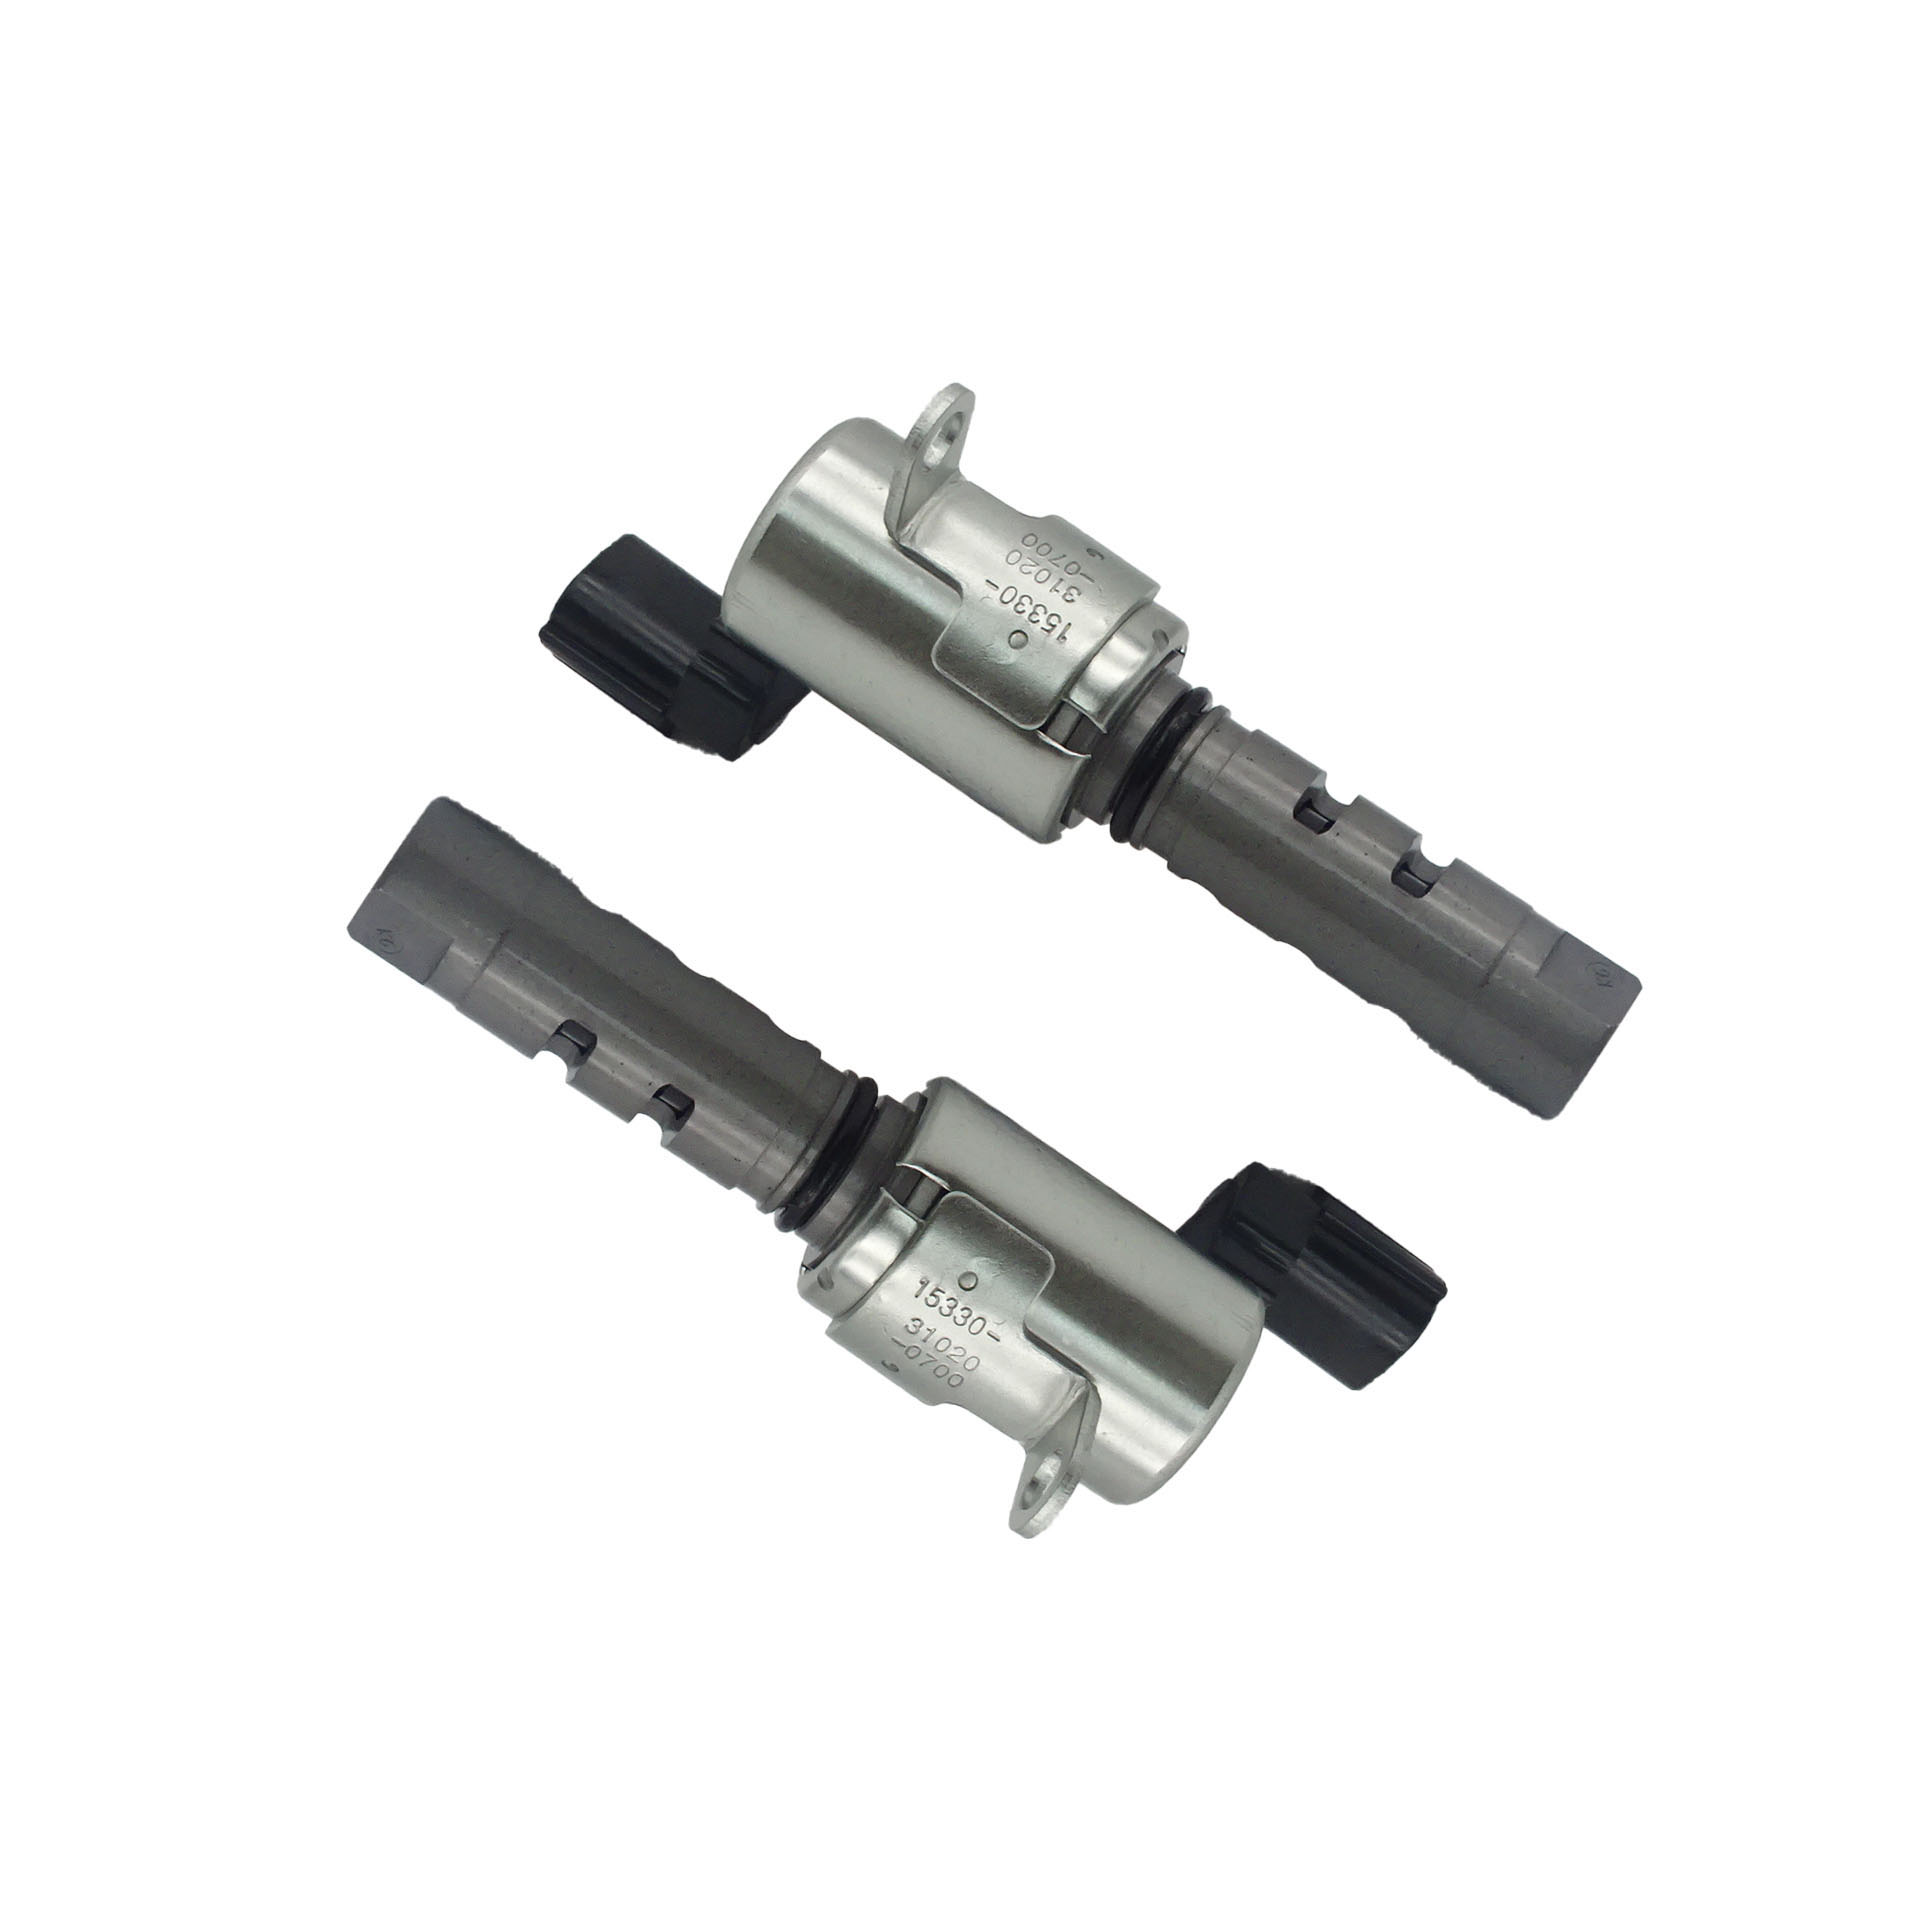 Engine oil VVT valve is suitable for Toytoa Avalon 2005-2008 Camry 2007-2011 RAV4 2006-2012 Venza 2009-2013 Sienna 2006-2010 Highlander 2008-2017 OE:15330-31020